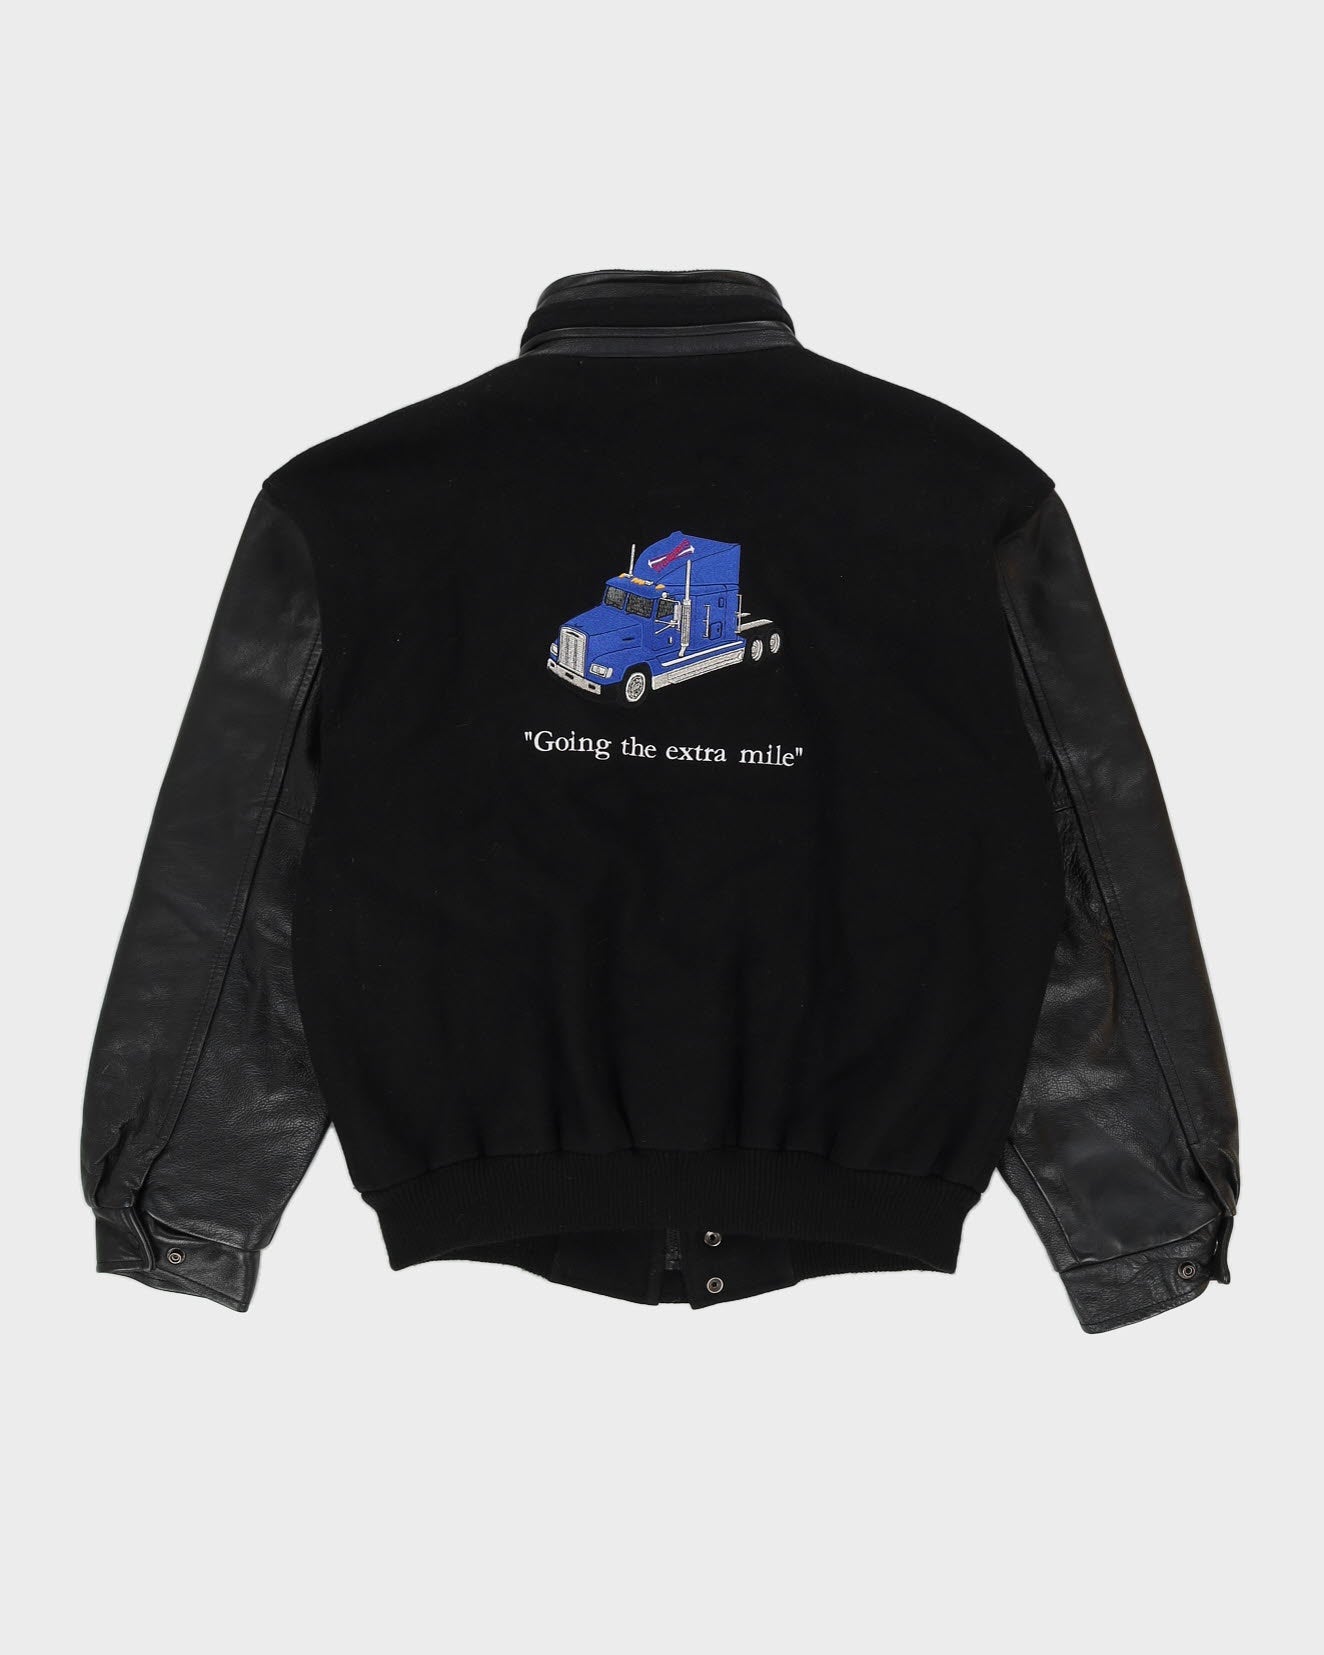 Black With Lorry Embroidery Baseball Jacket - XXL